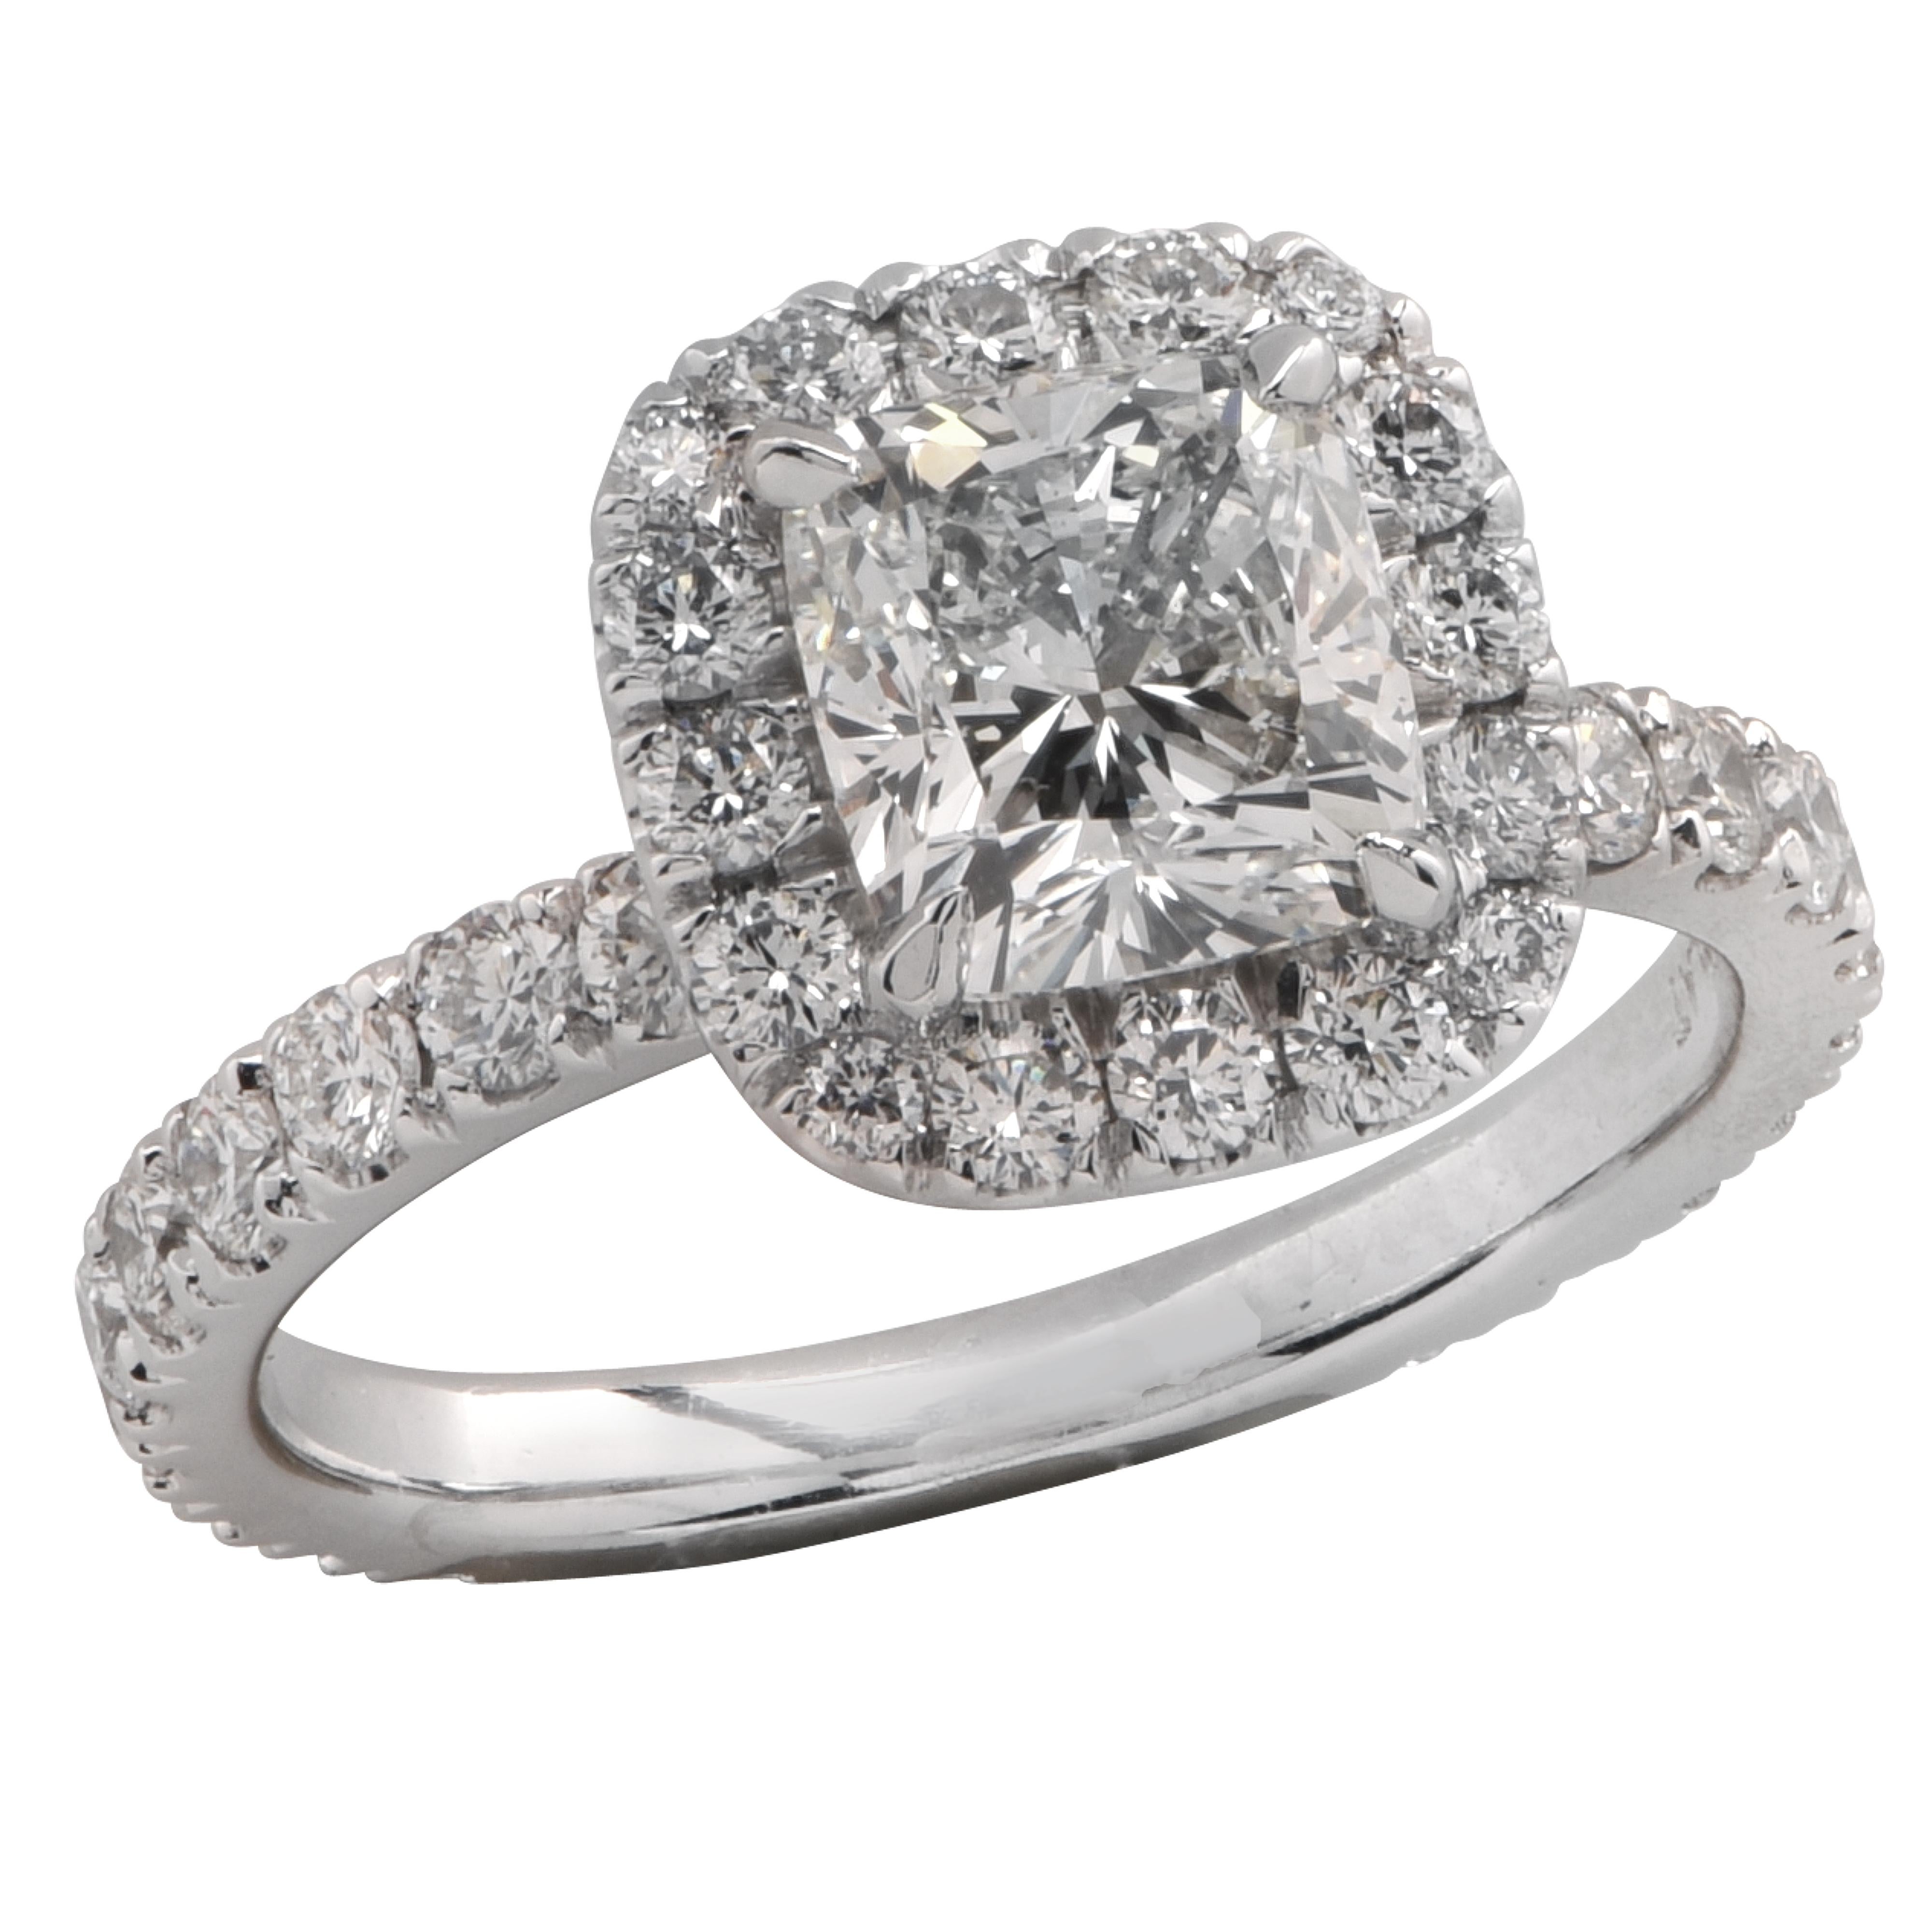 GIA Certified 1.52 Carat Cushion Cut Diamond Engagement Ring